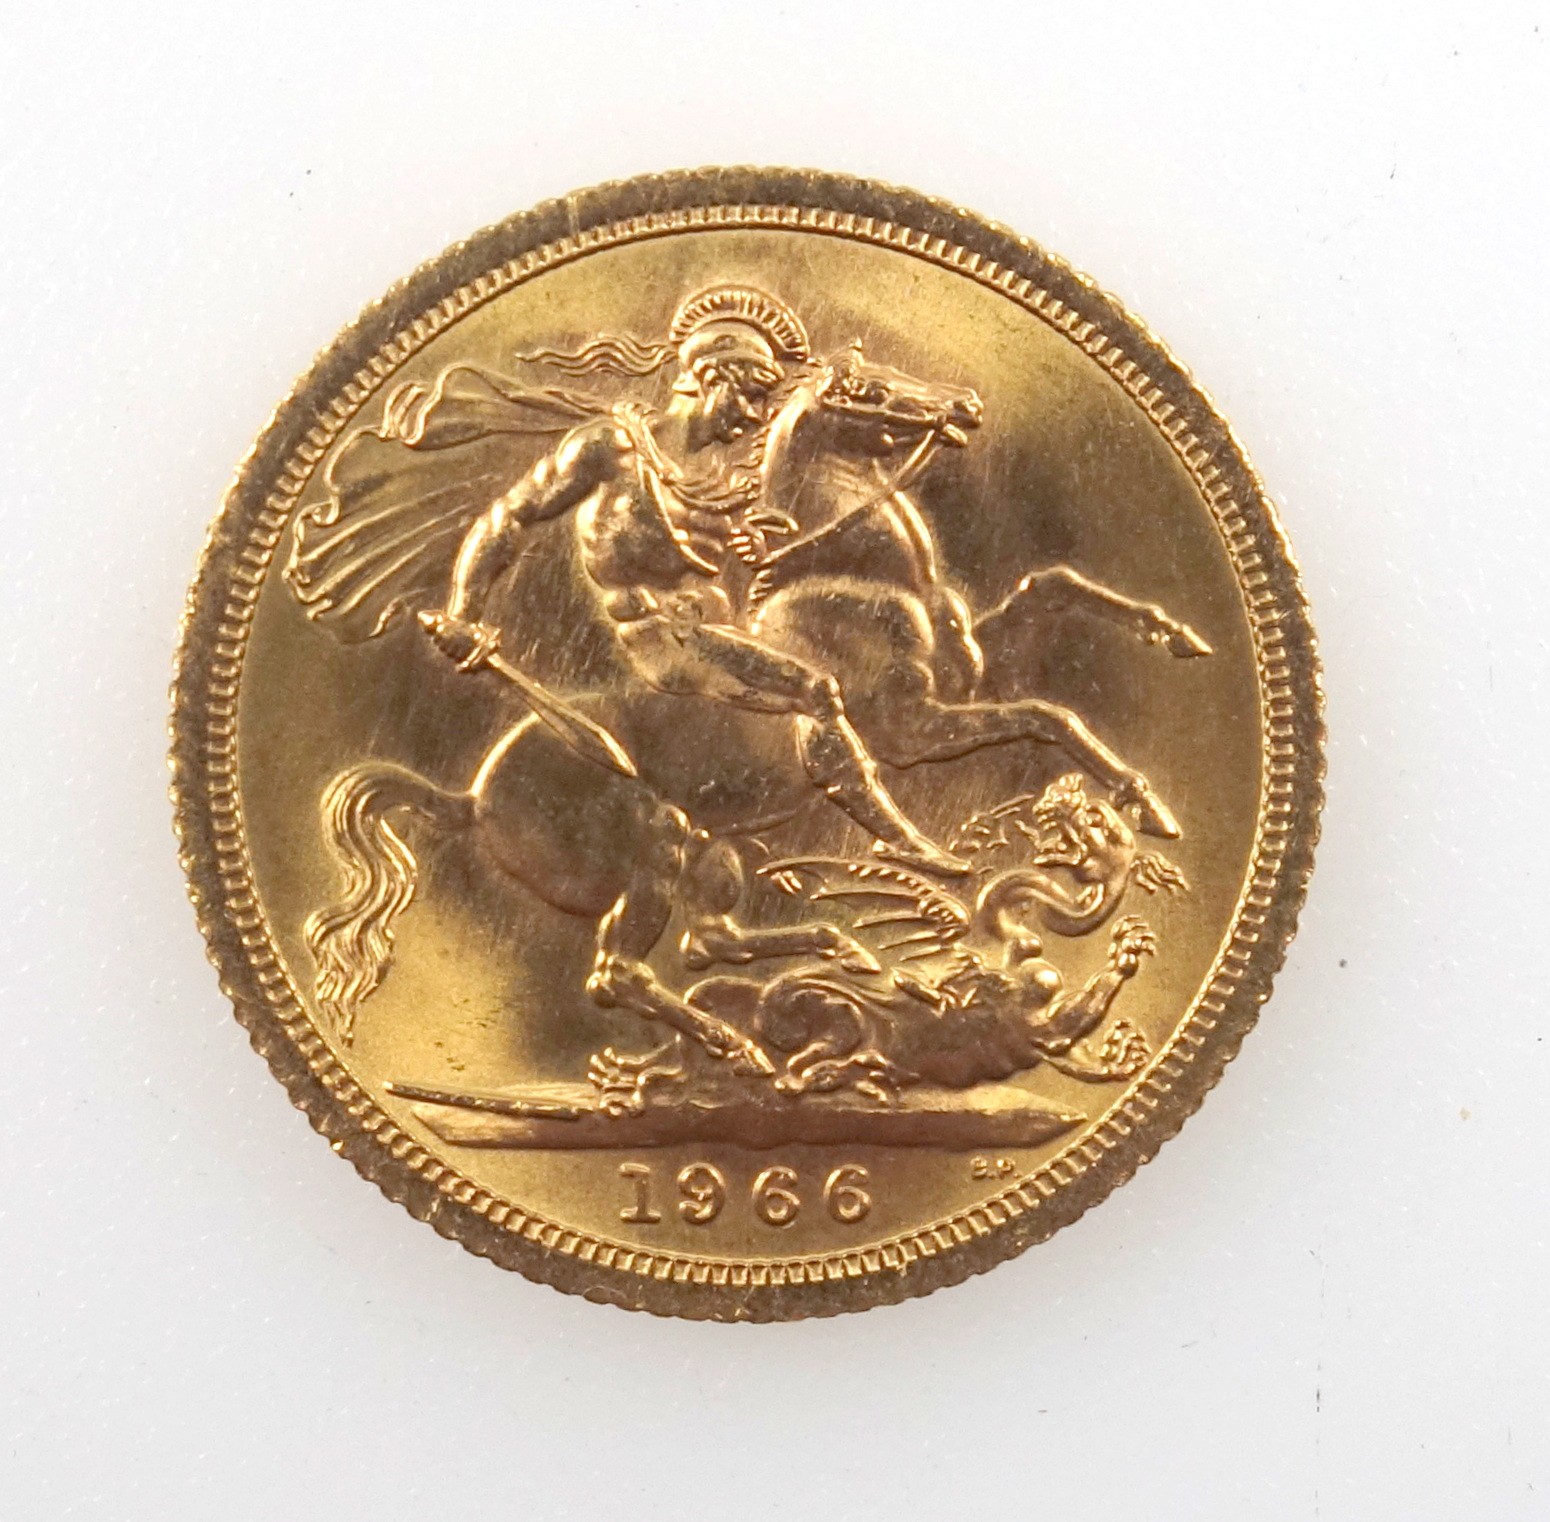 Elizabeth II gold sovereign, 1966, an unc., (slight ek's) - Image 2 of 2